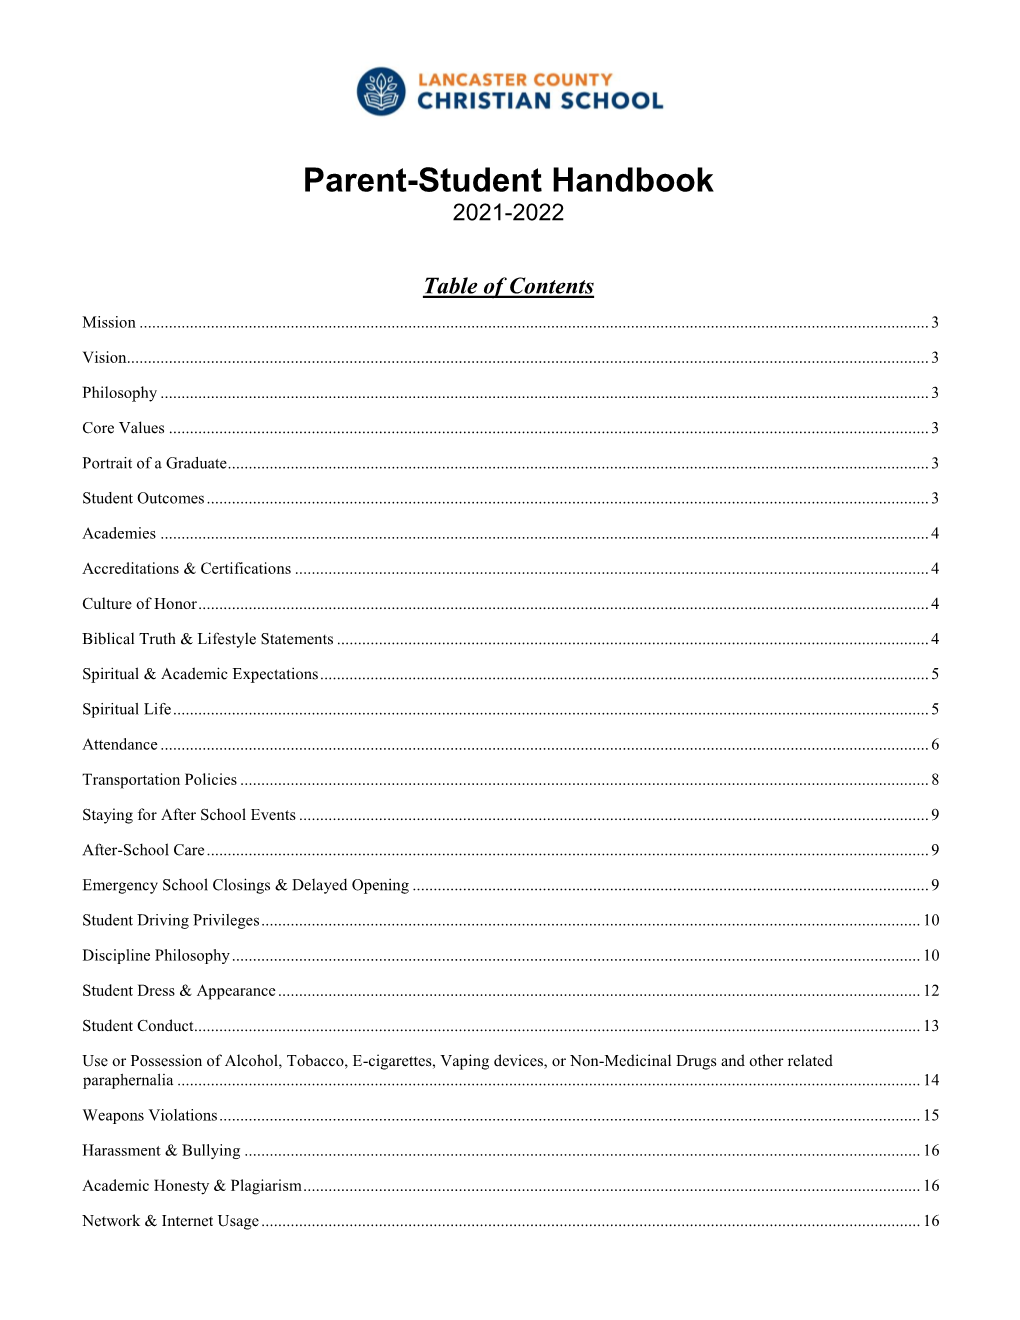 Parent-Student Handbook 2021-2022